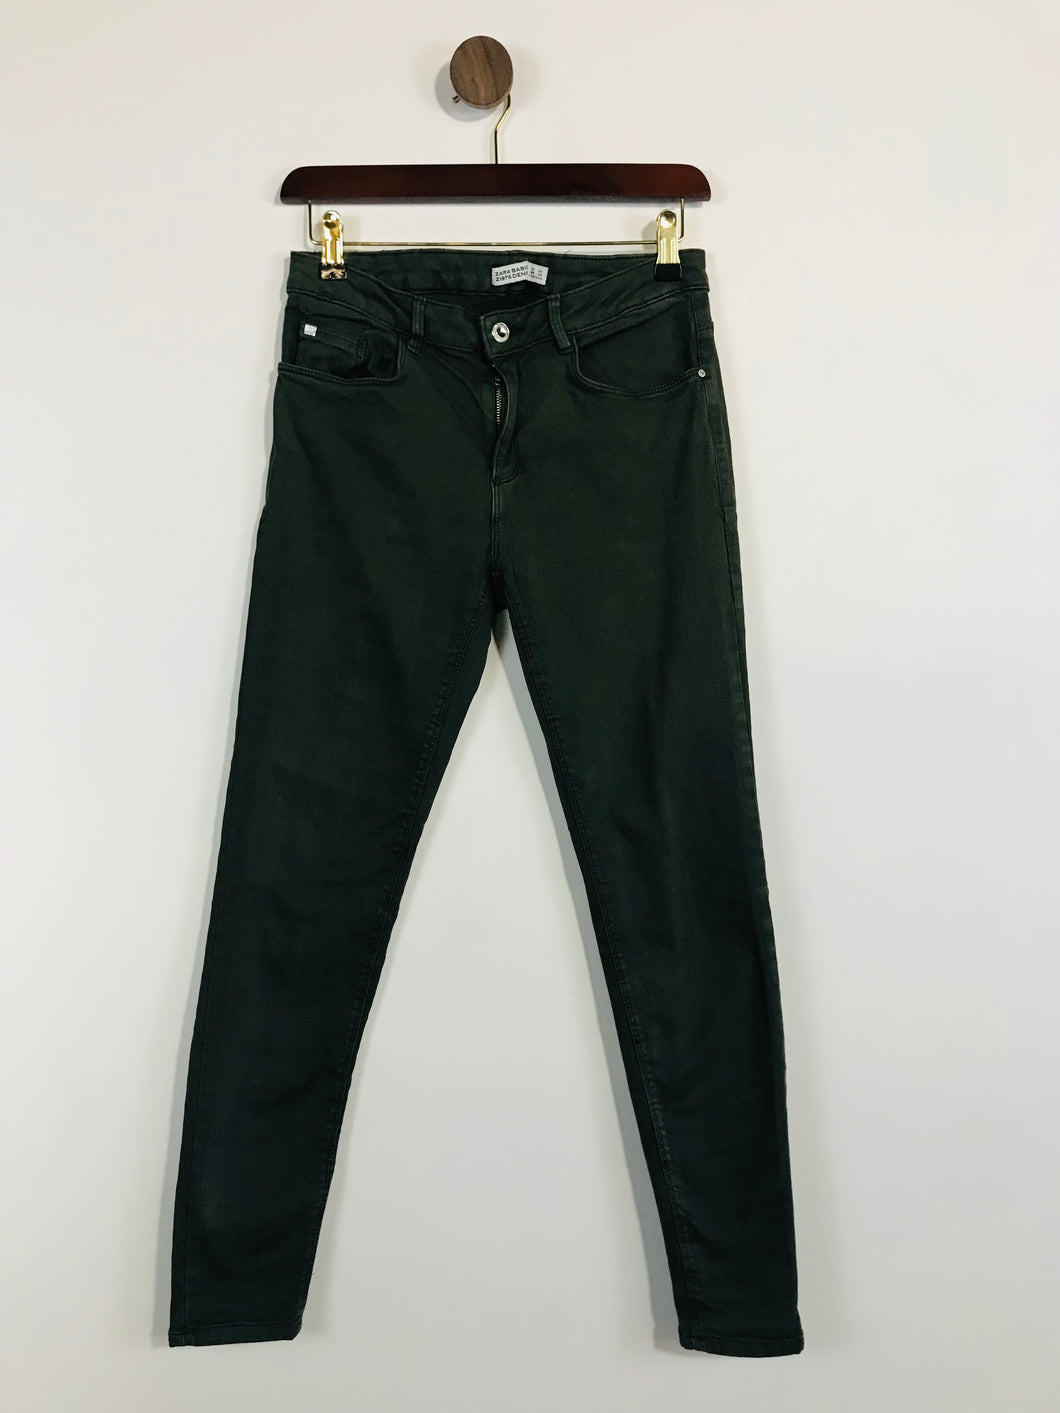 Zara Women's Skinny Jeggings Jeans | 40 UK12 | Green